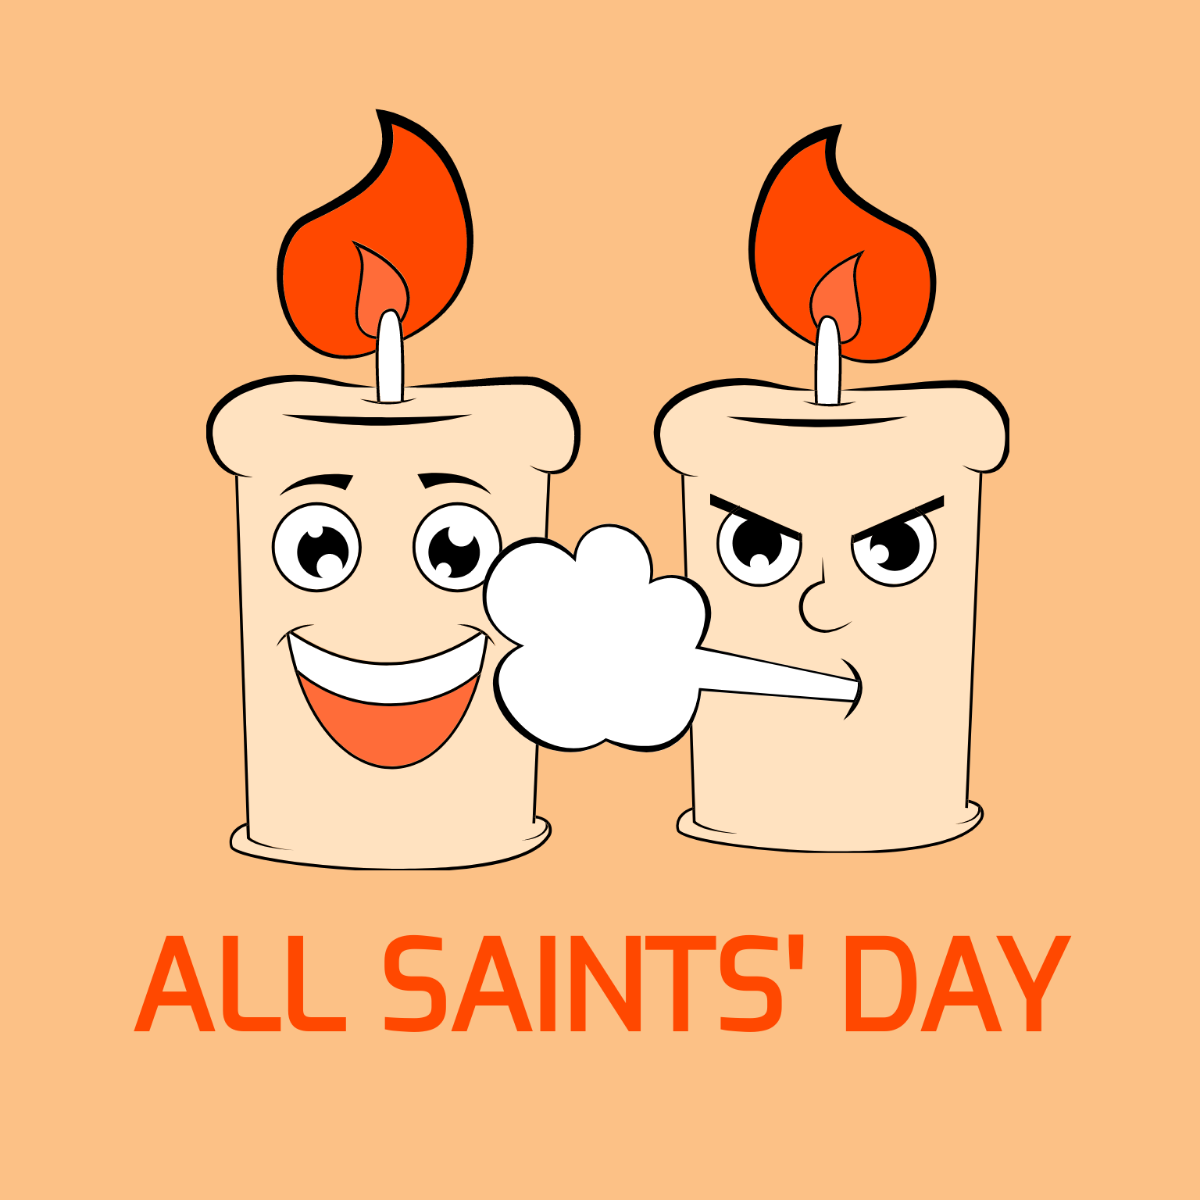 Free All Saints' Day Cartoon Vector Template